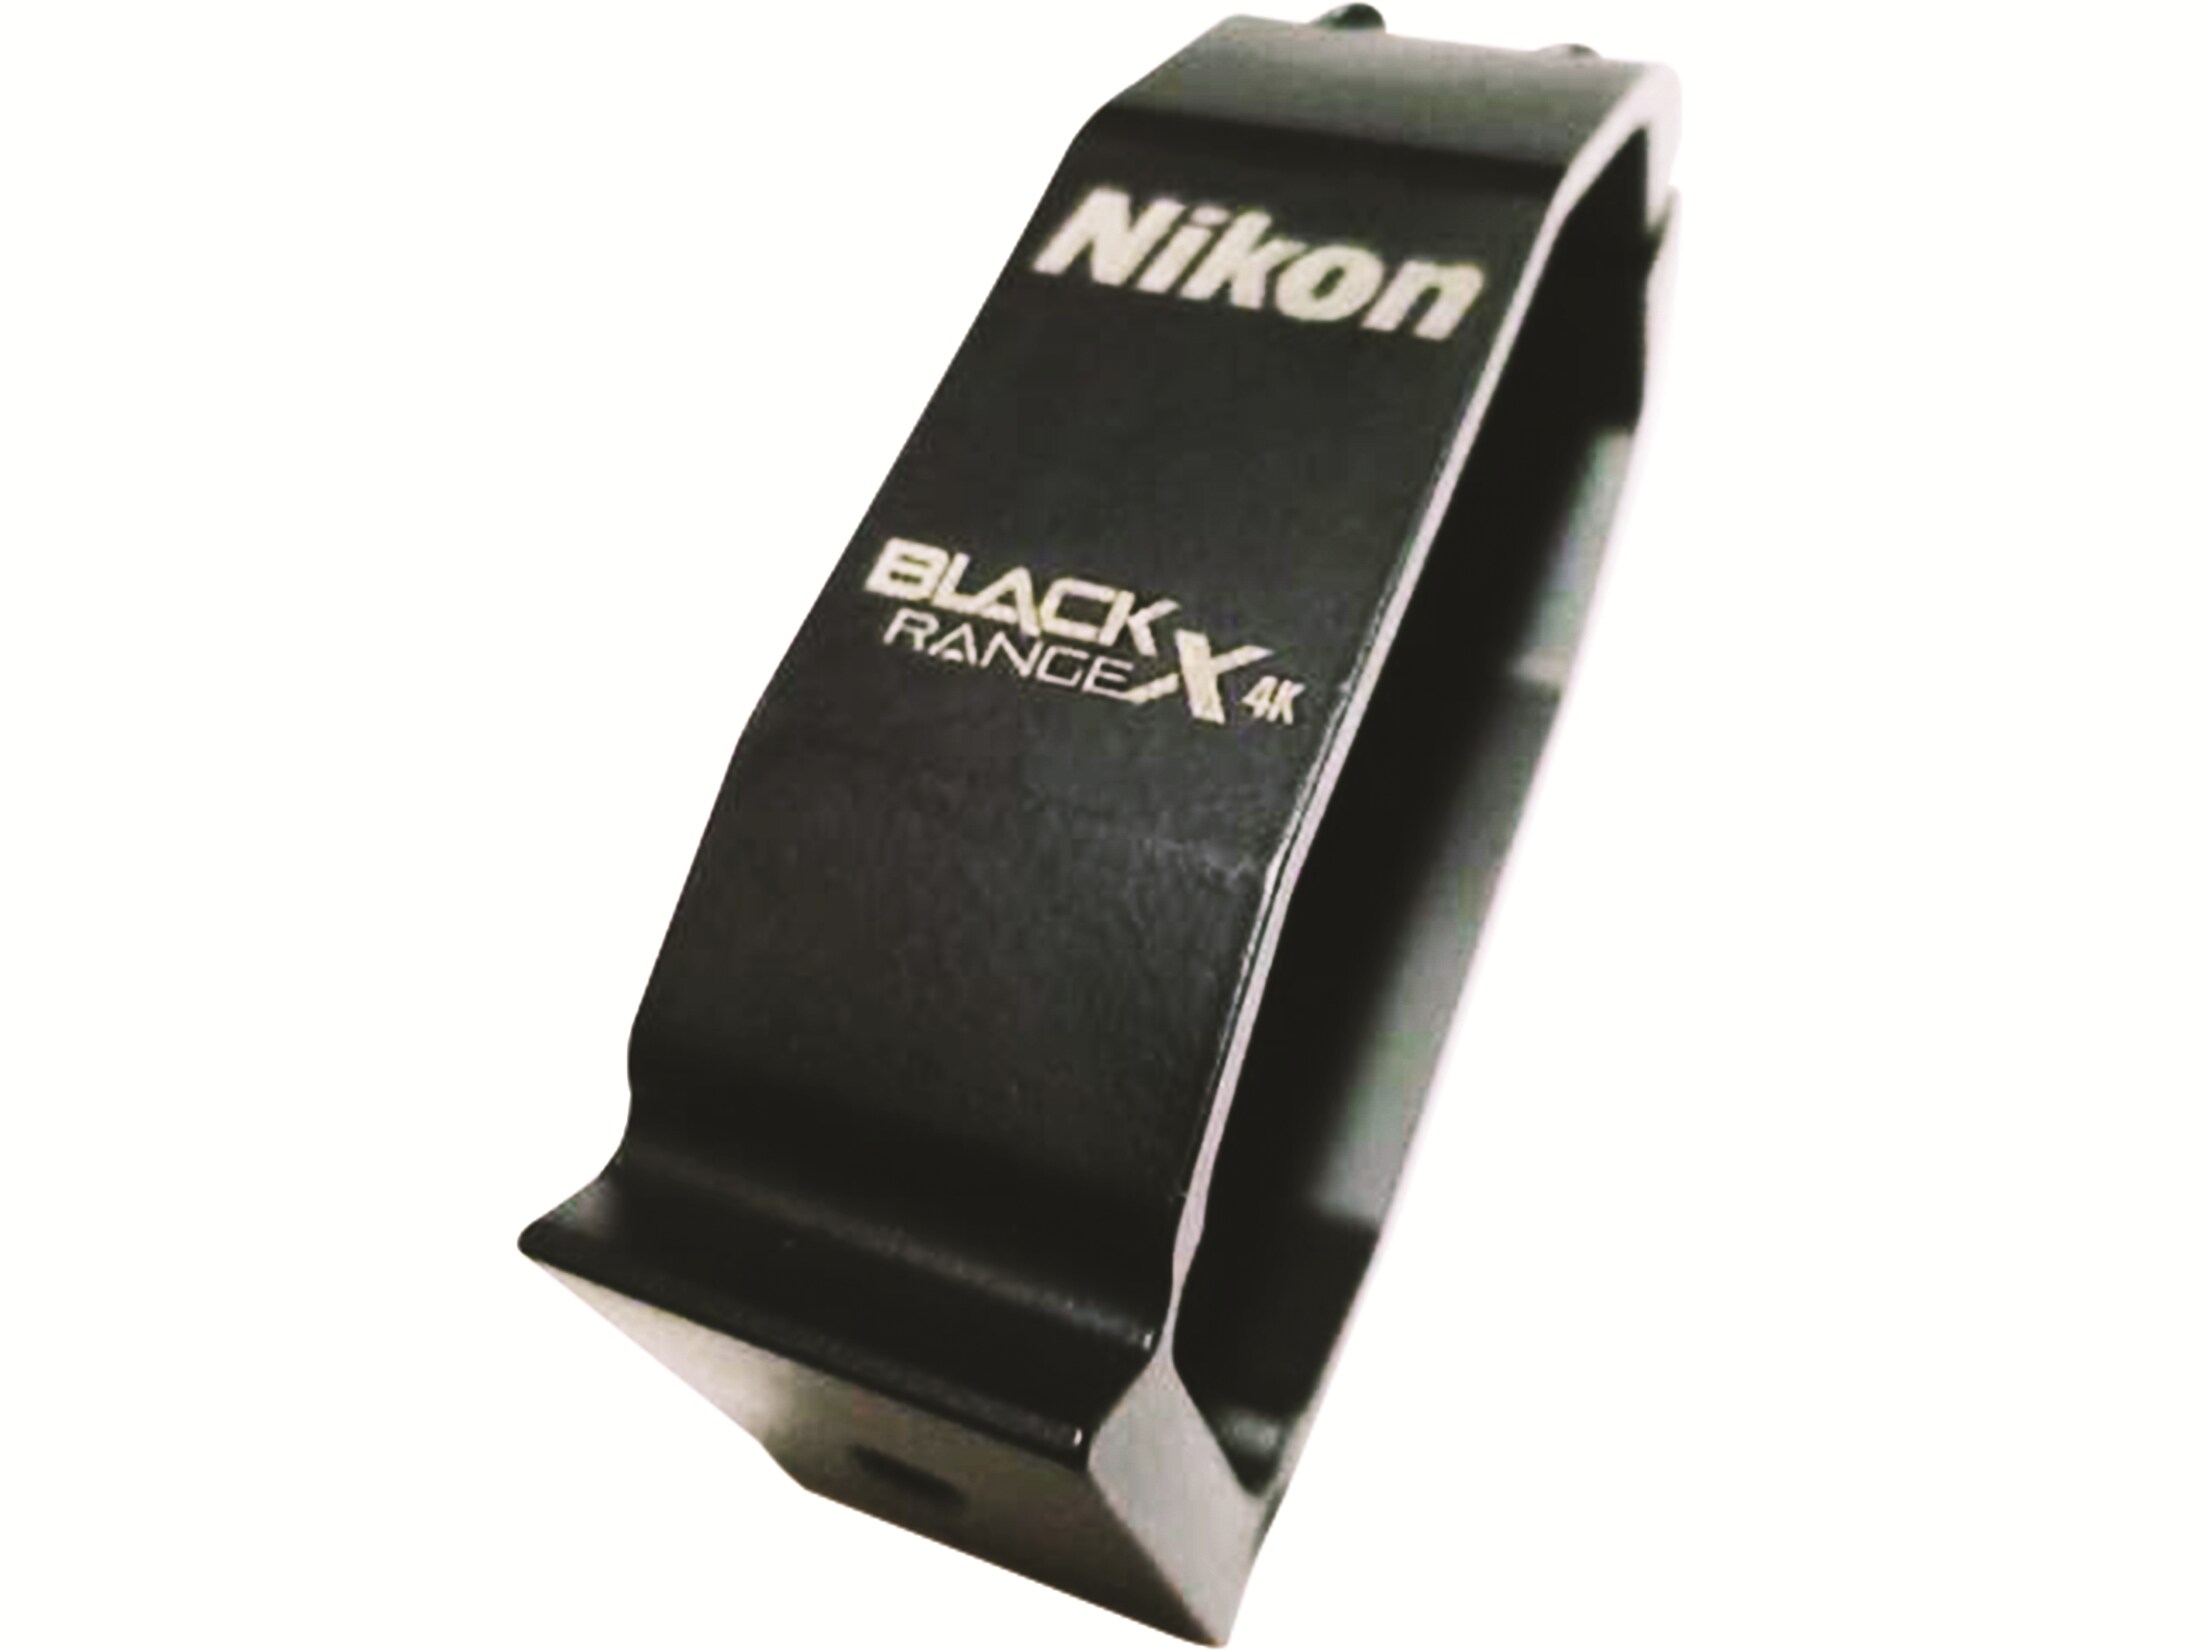 Nikon Black RangeX 4K Rangefinder tripod mount only Arca-Swiss compatible 